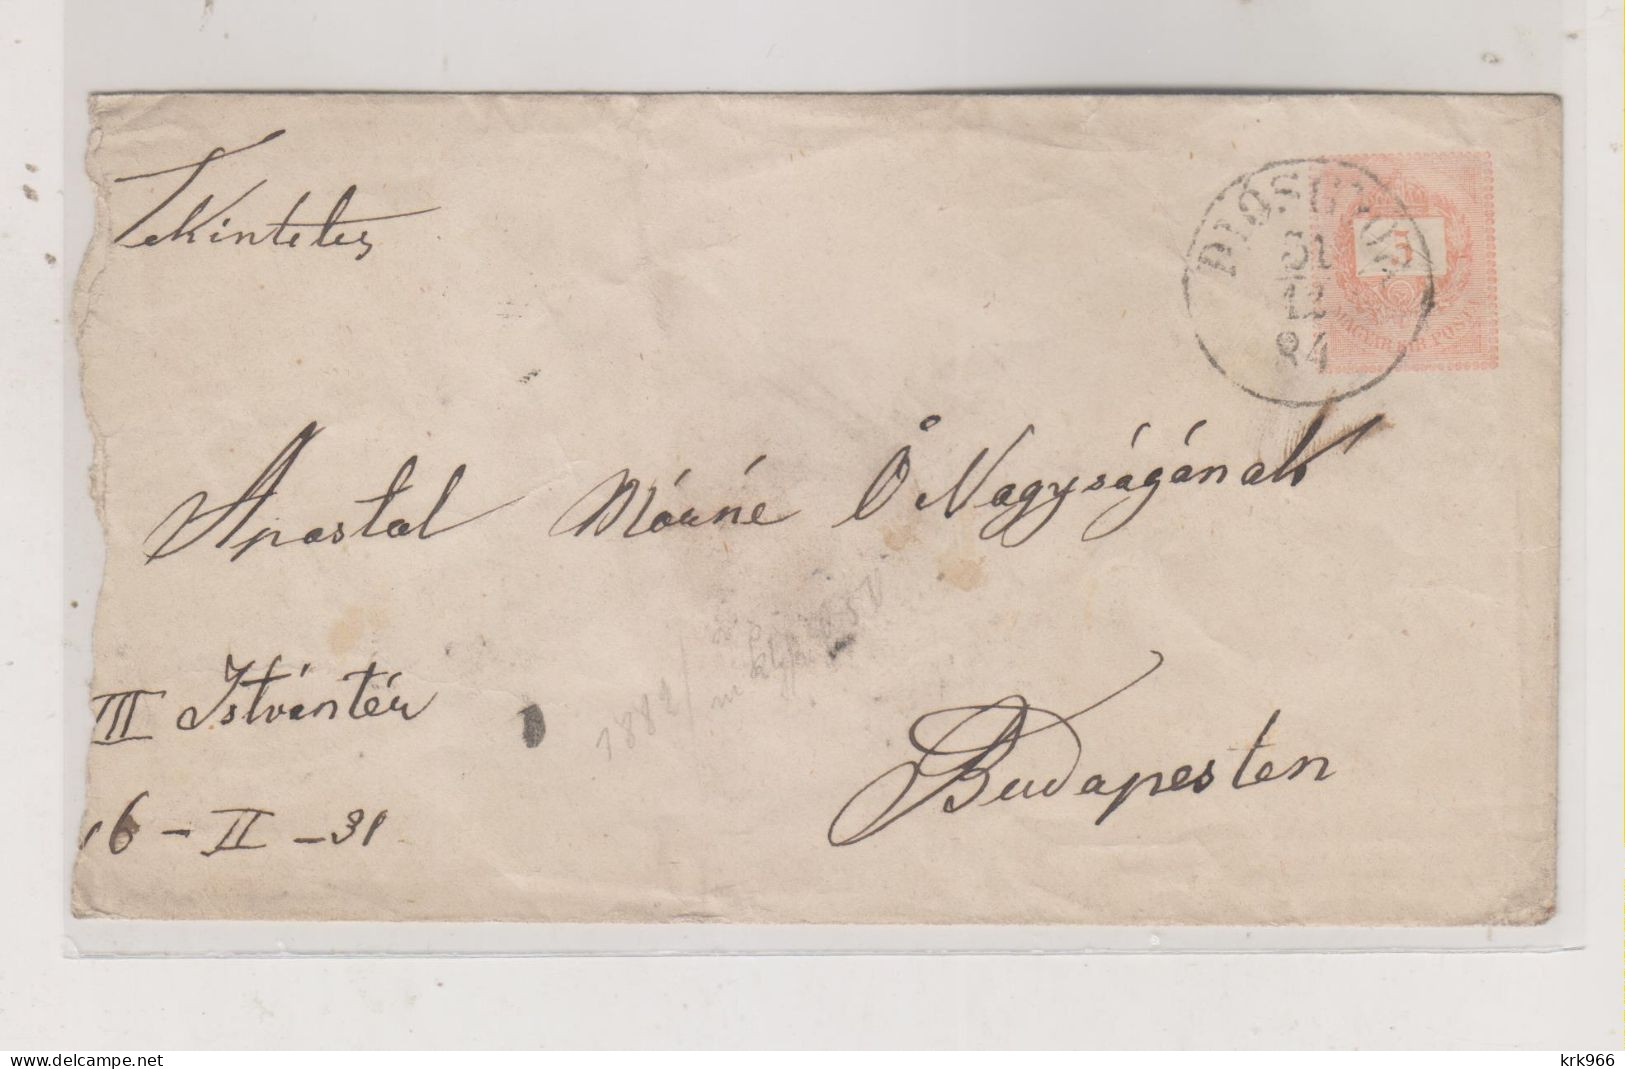 HUNGARY. 1884 DIOSGYOR Nice Postal Stationery - Interi Postali